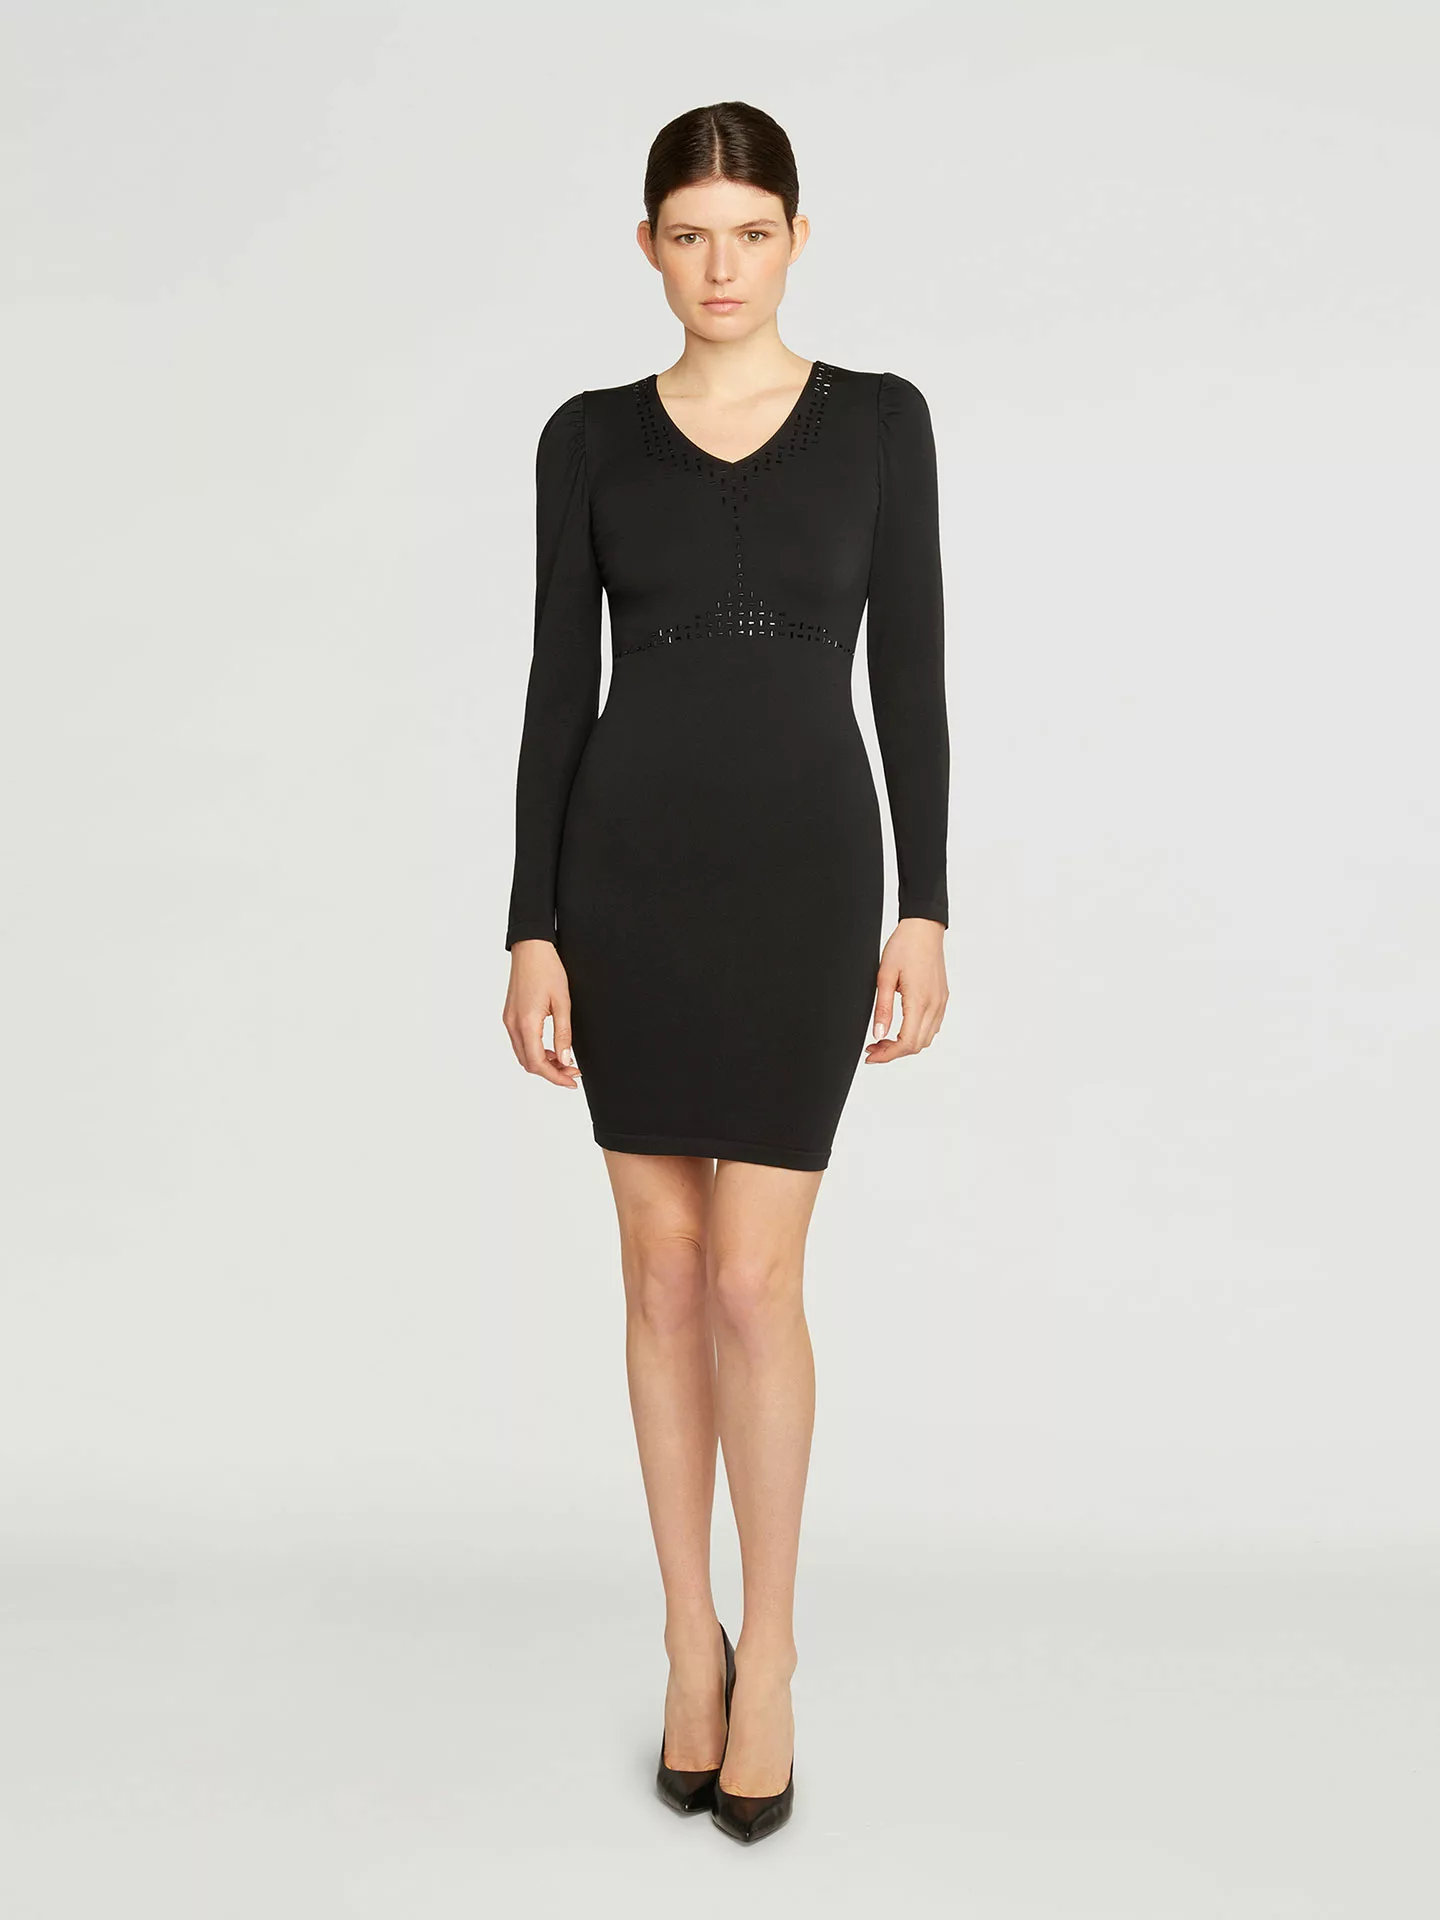 Wolford - Gilda Dress, Frau, black/black, Größe: XS günstig online kaufen